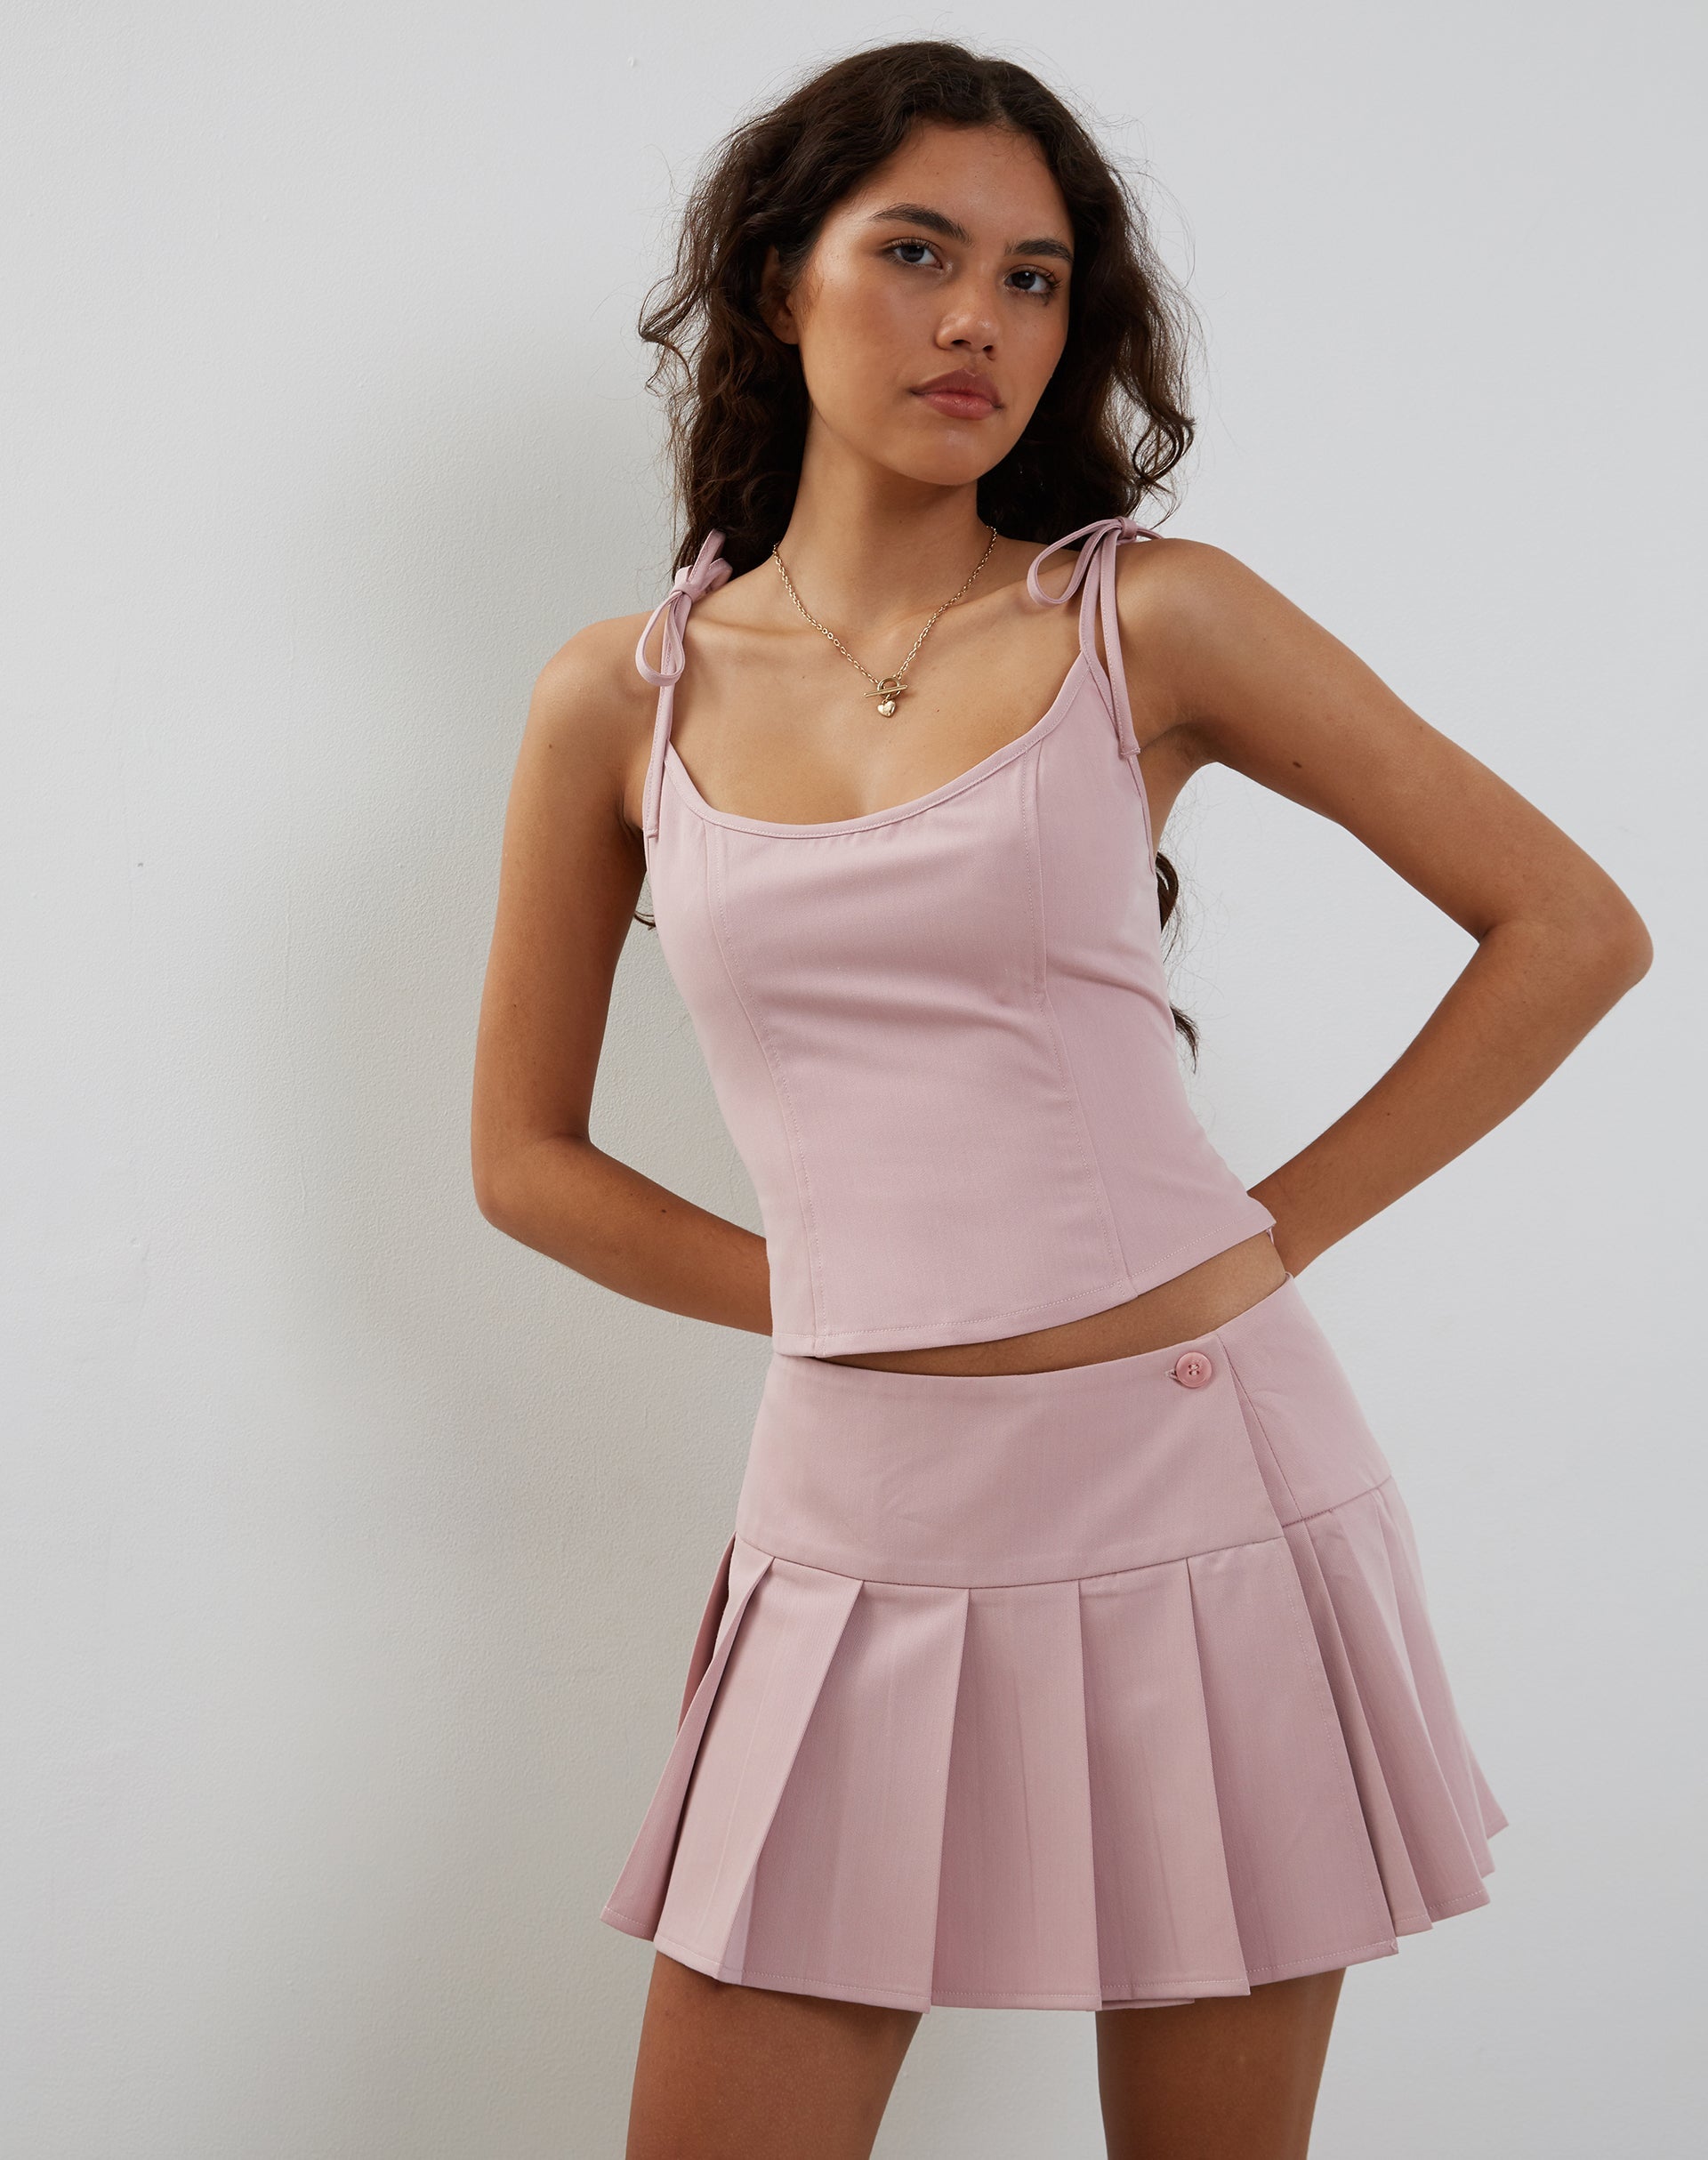 Imagen de Casini Micro falda plisada rosa